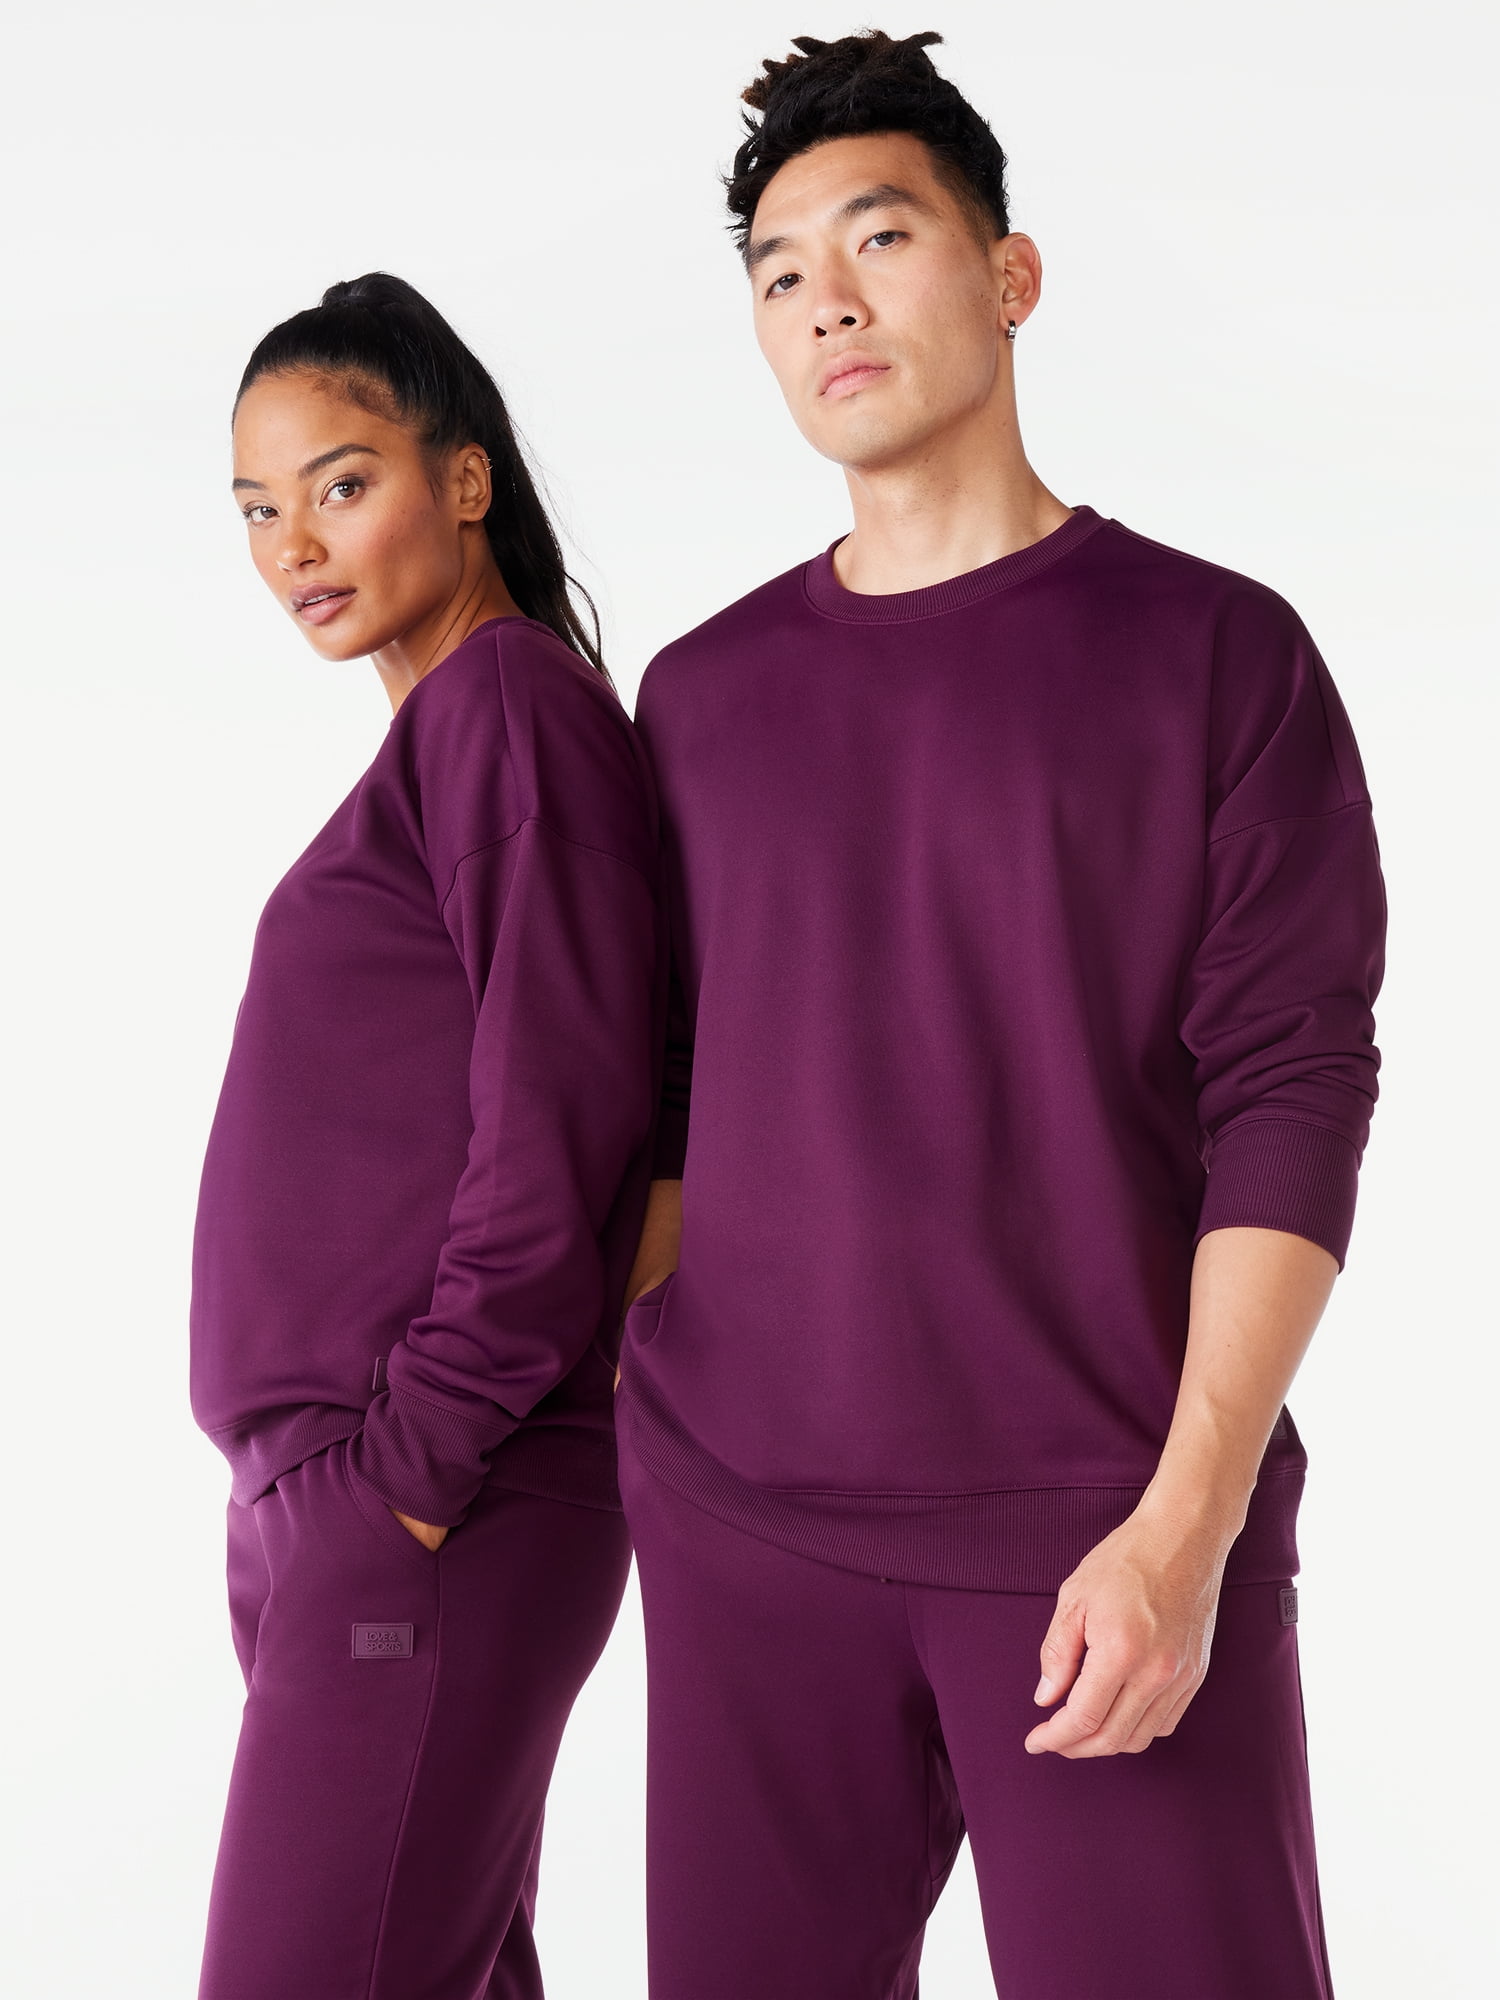 Love & Sports All Gender Sweatshirt, Sizes XS-XXXL - Walmart.com